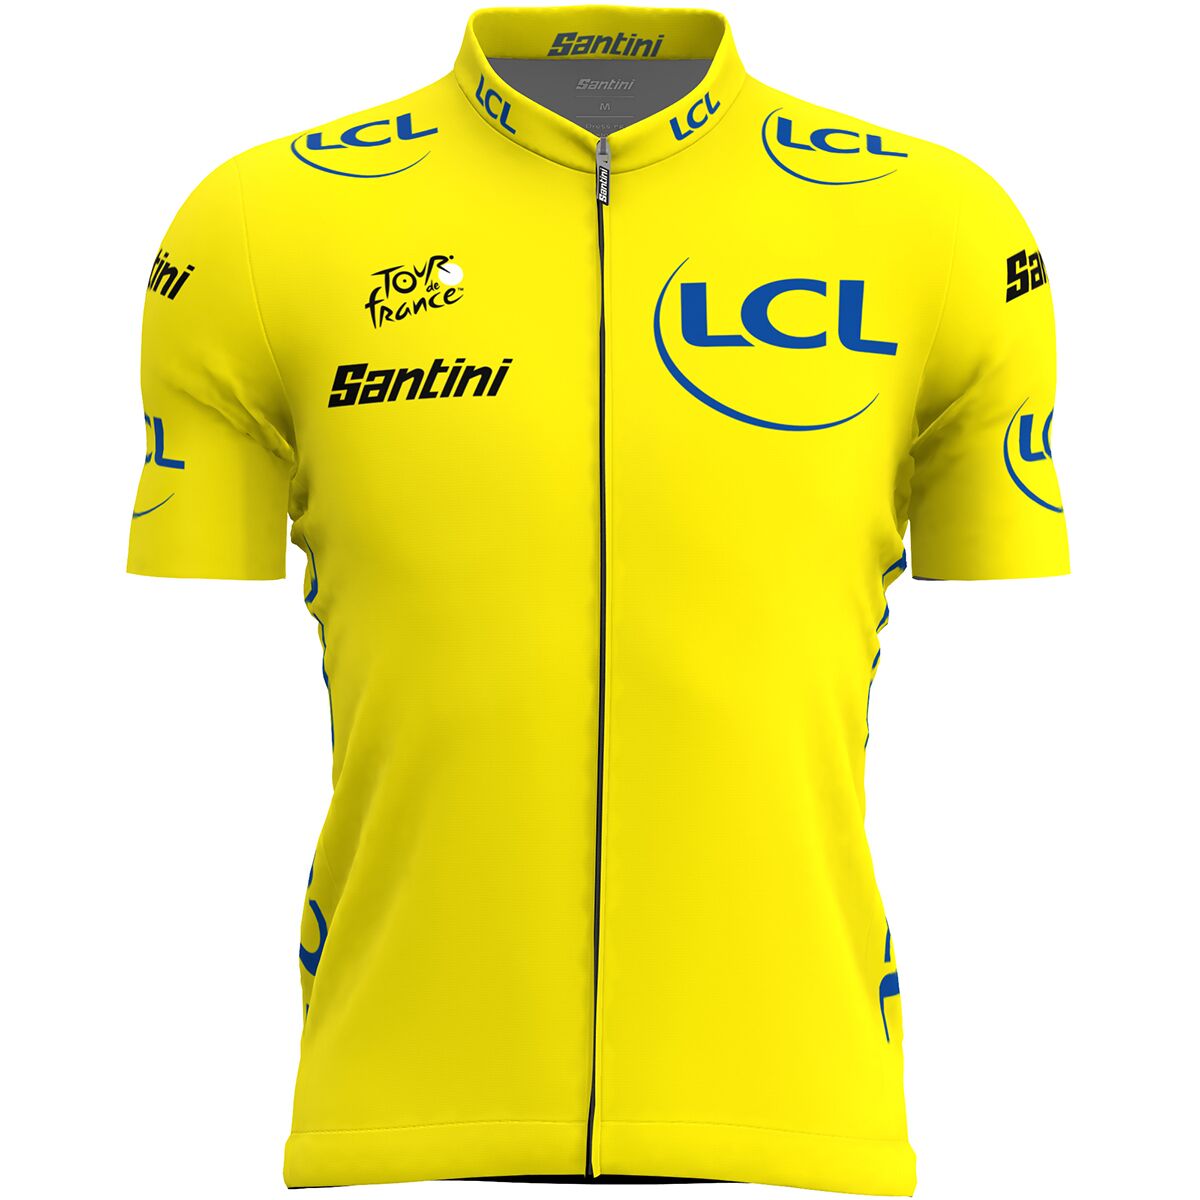 Santini Tour de France Replica Overall Leader Jersey - Men's